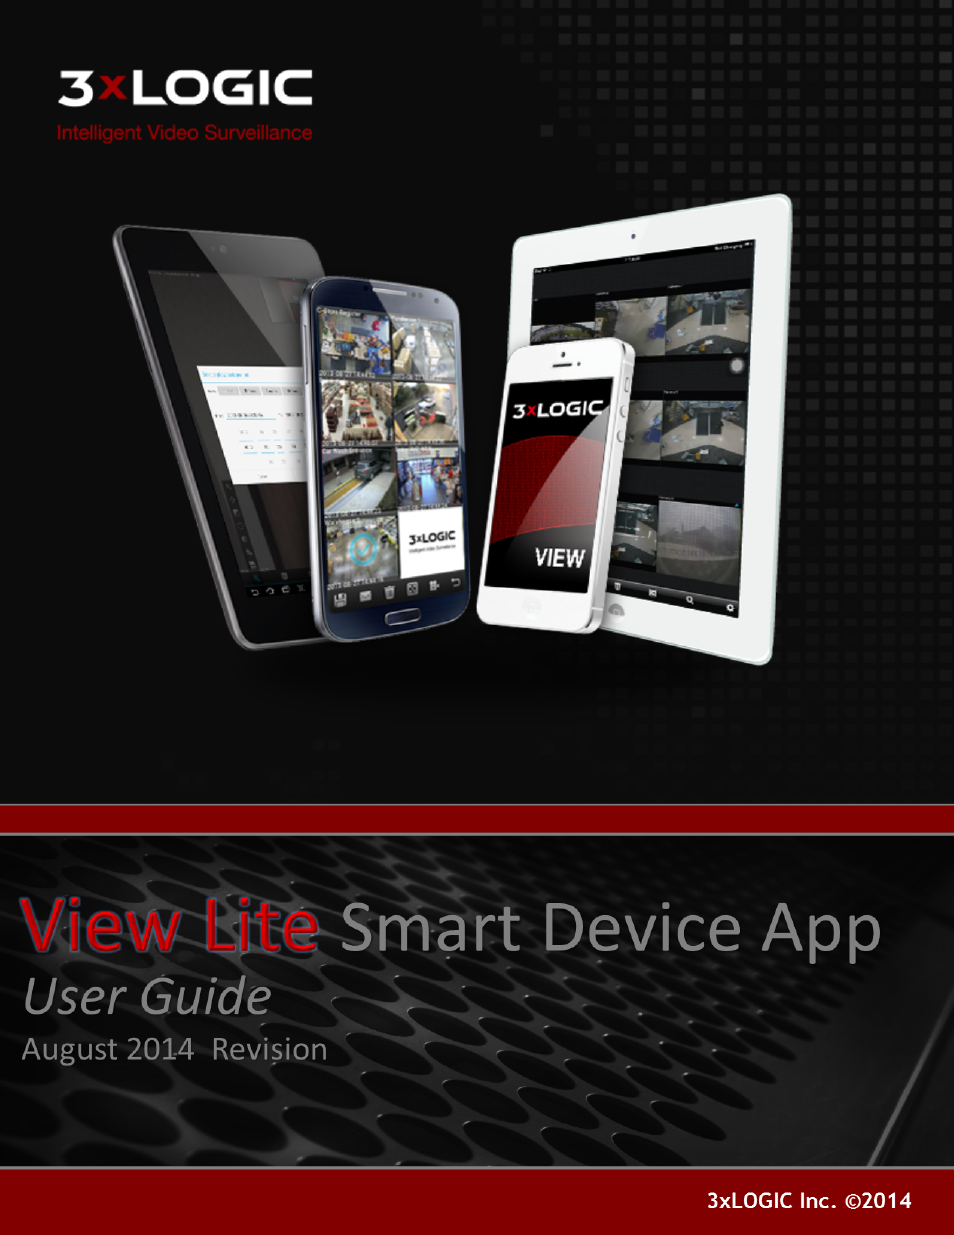 View Lite Smart Device App